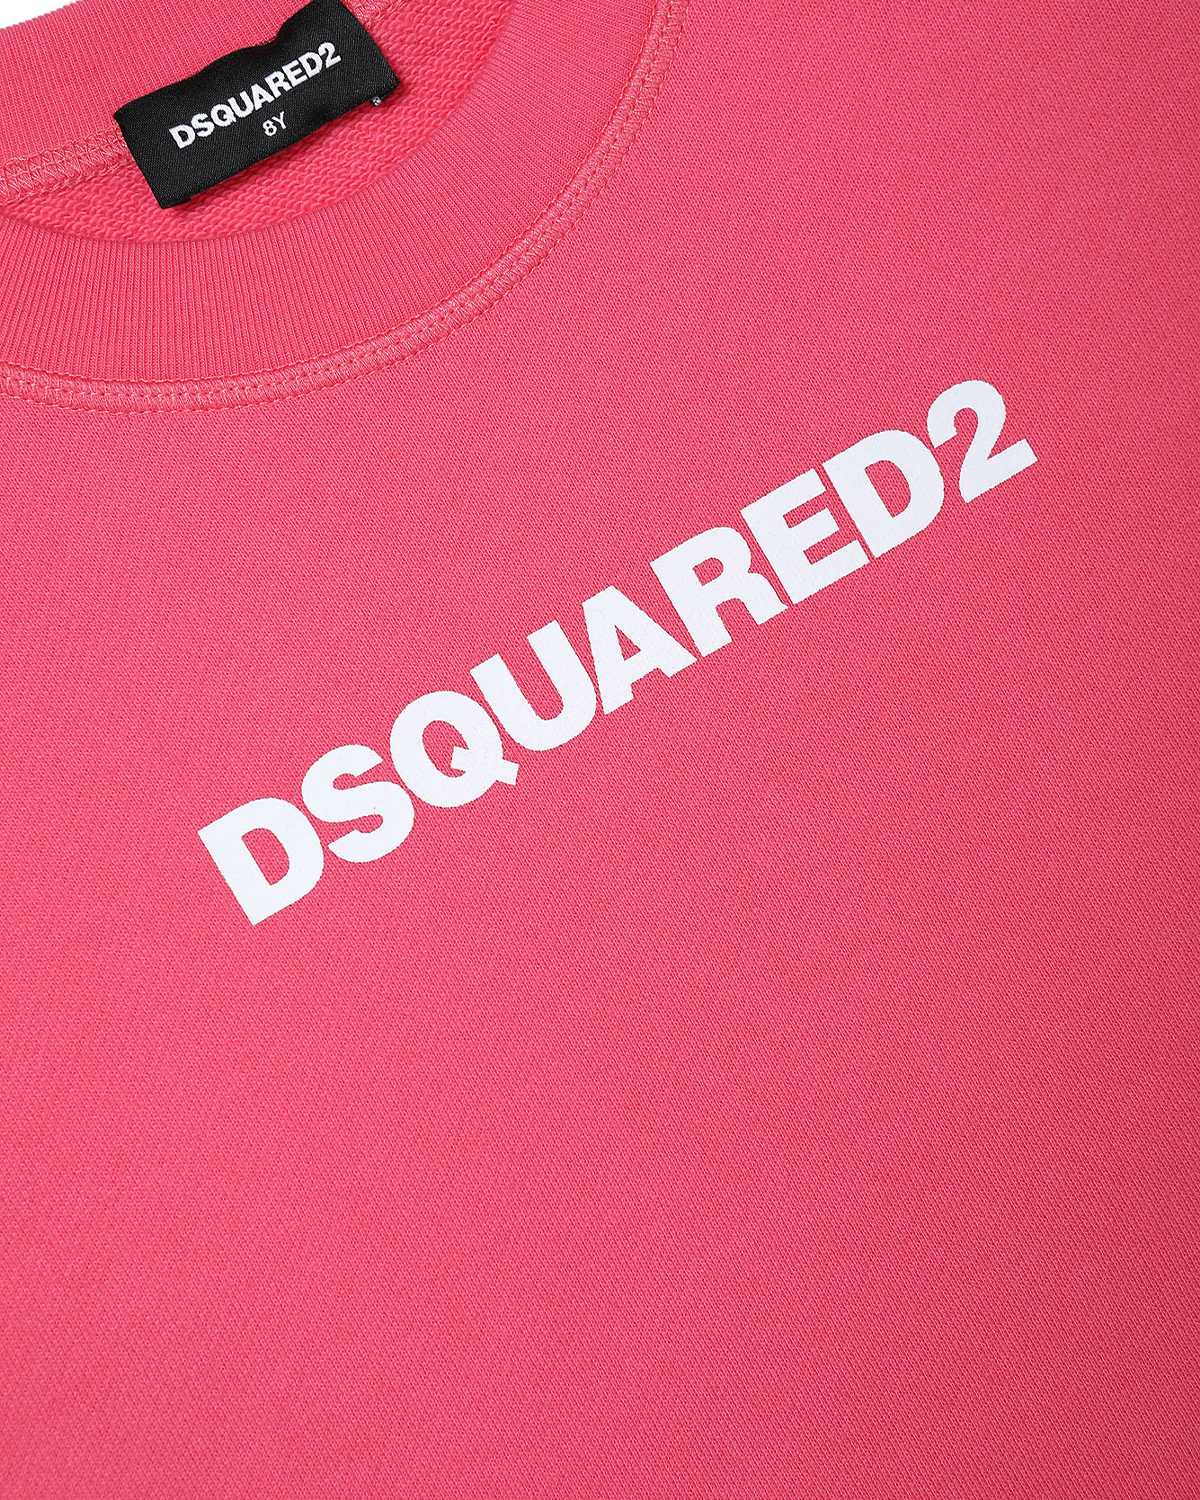 Dsquared2 Junior Girls Logo Sweater Camellia Roze